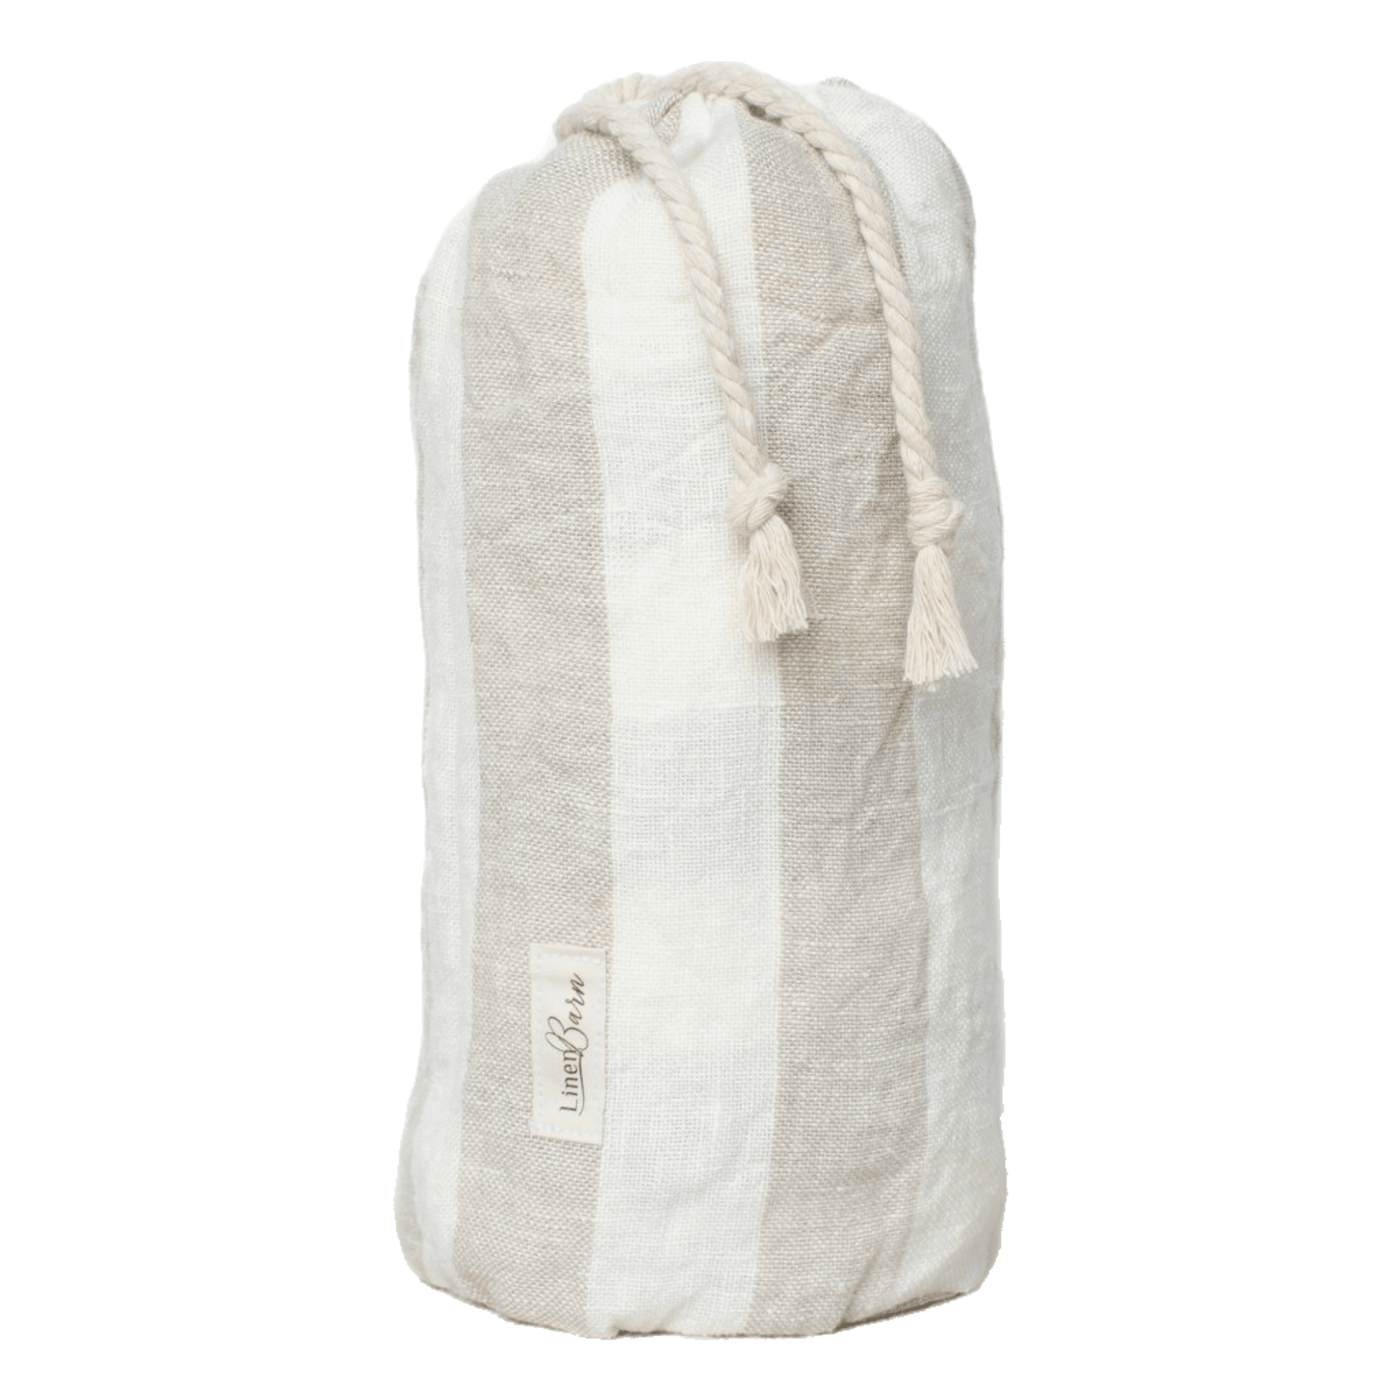 Linen Resort Towel - White and Natural Stripes - LinenBarn